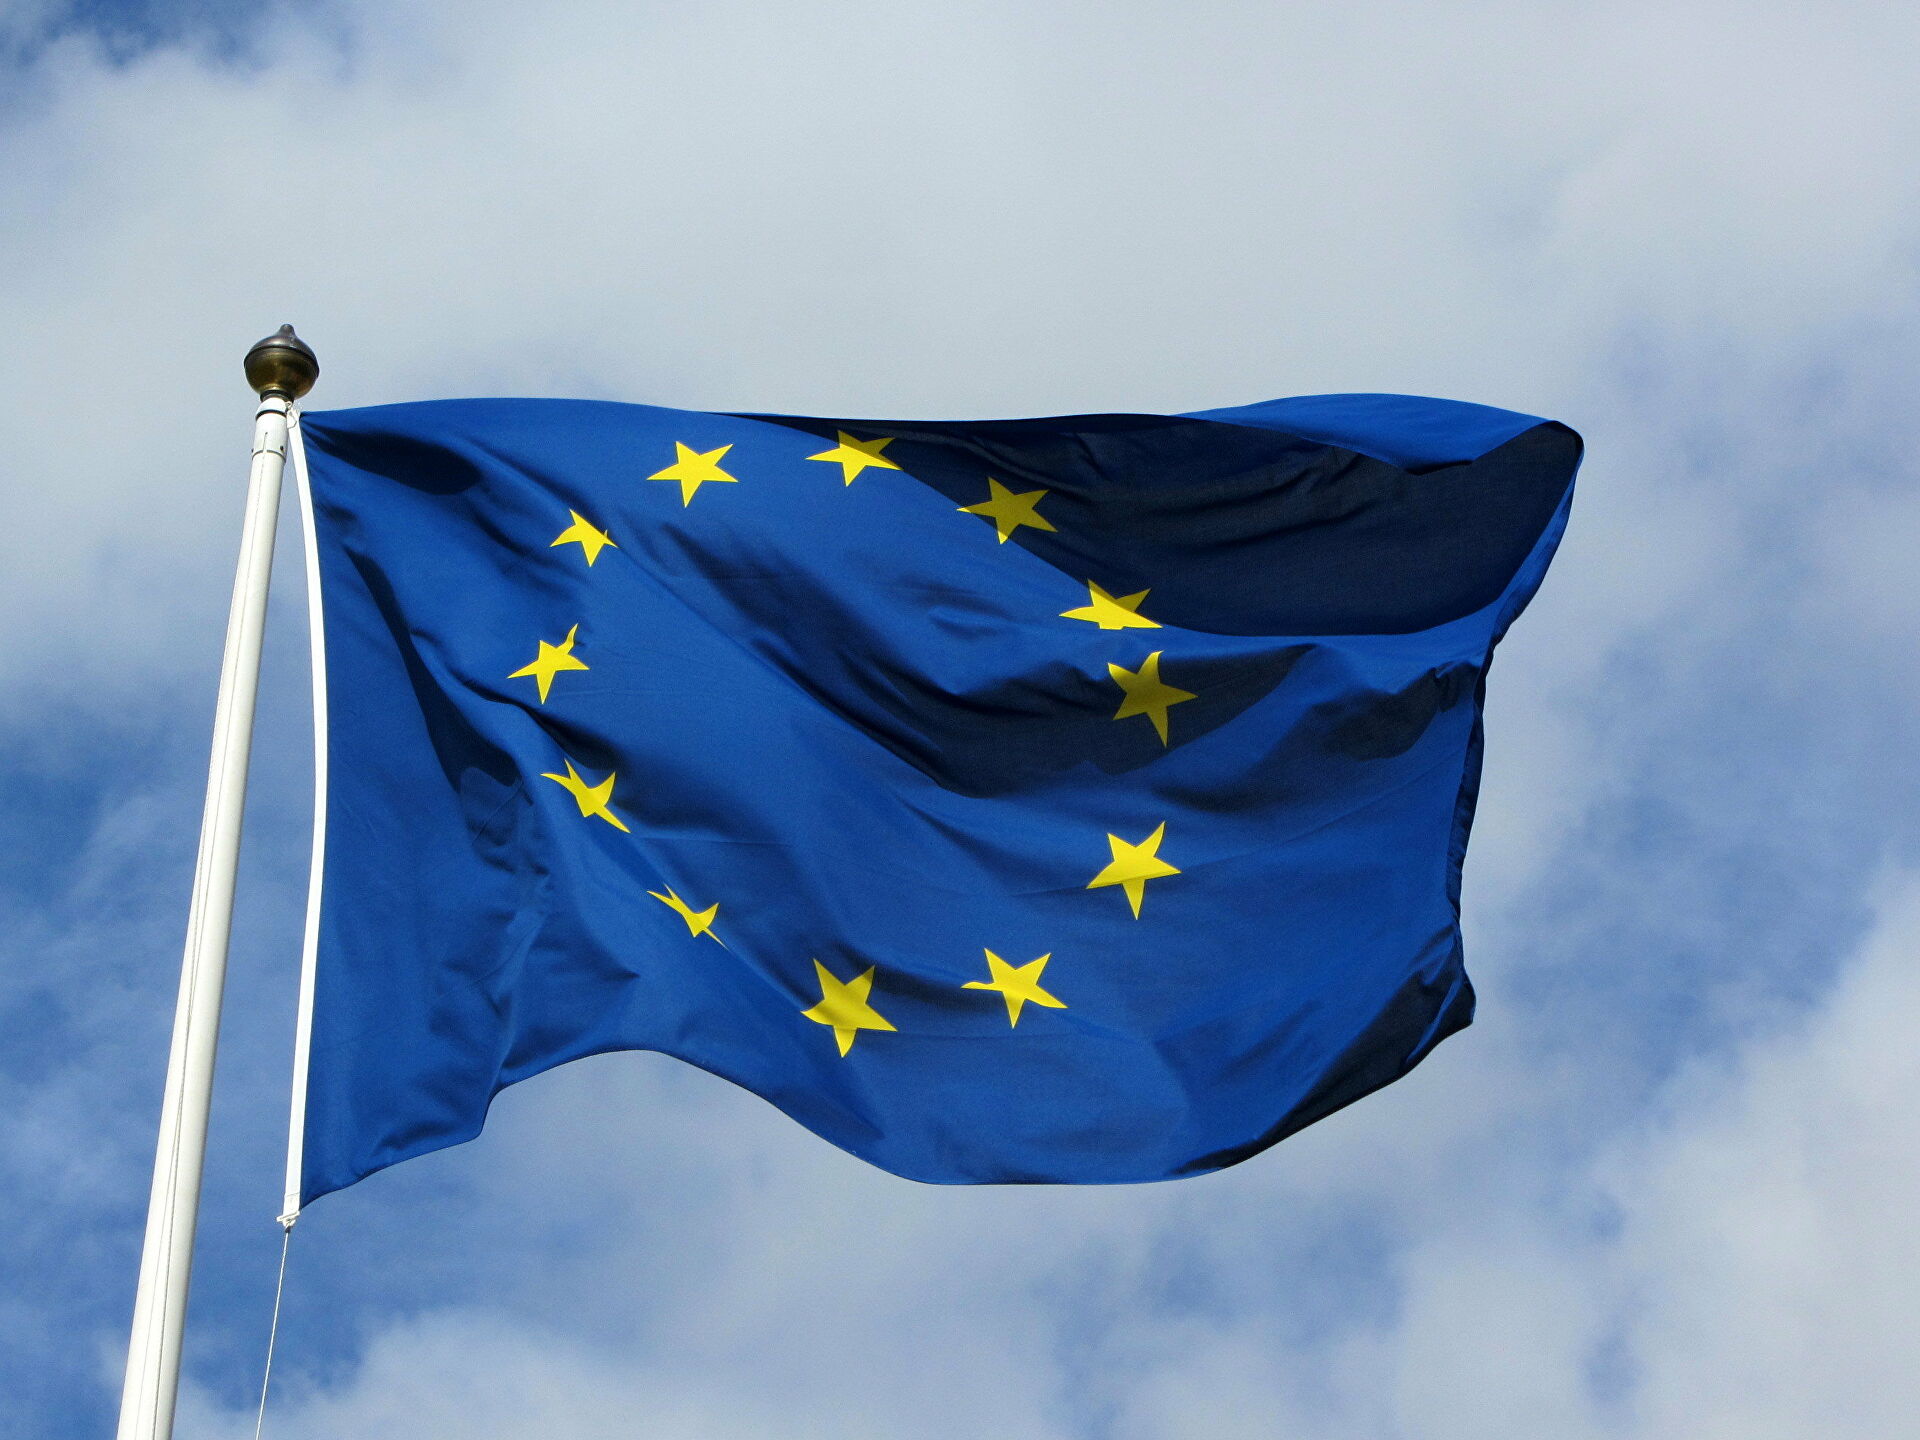 Европа, санкции, Европол, Евросоюз, флаг